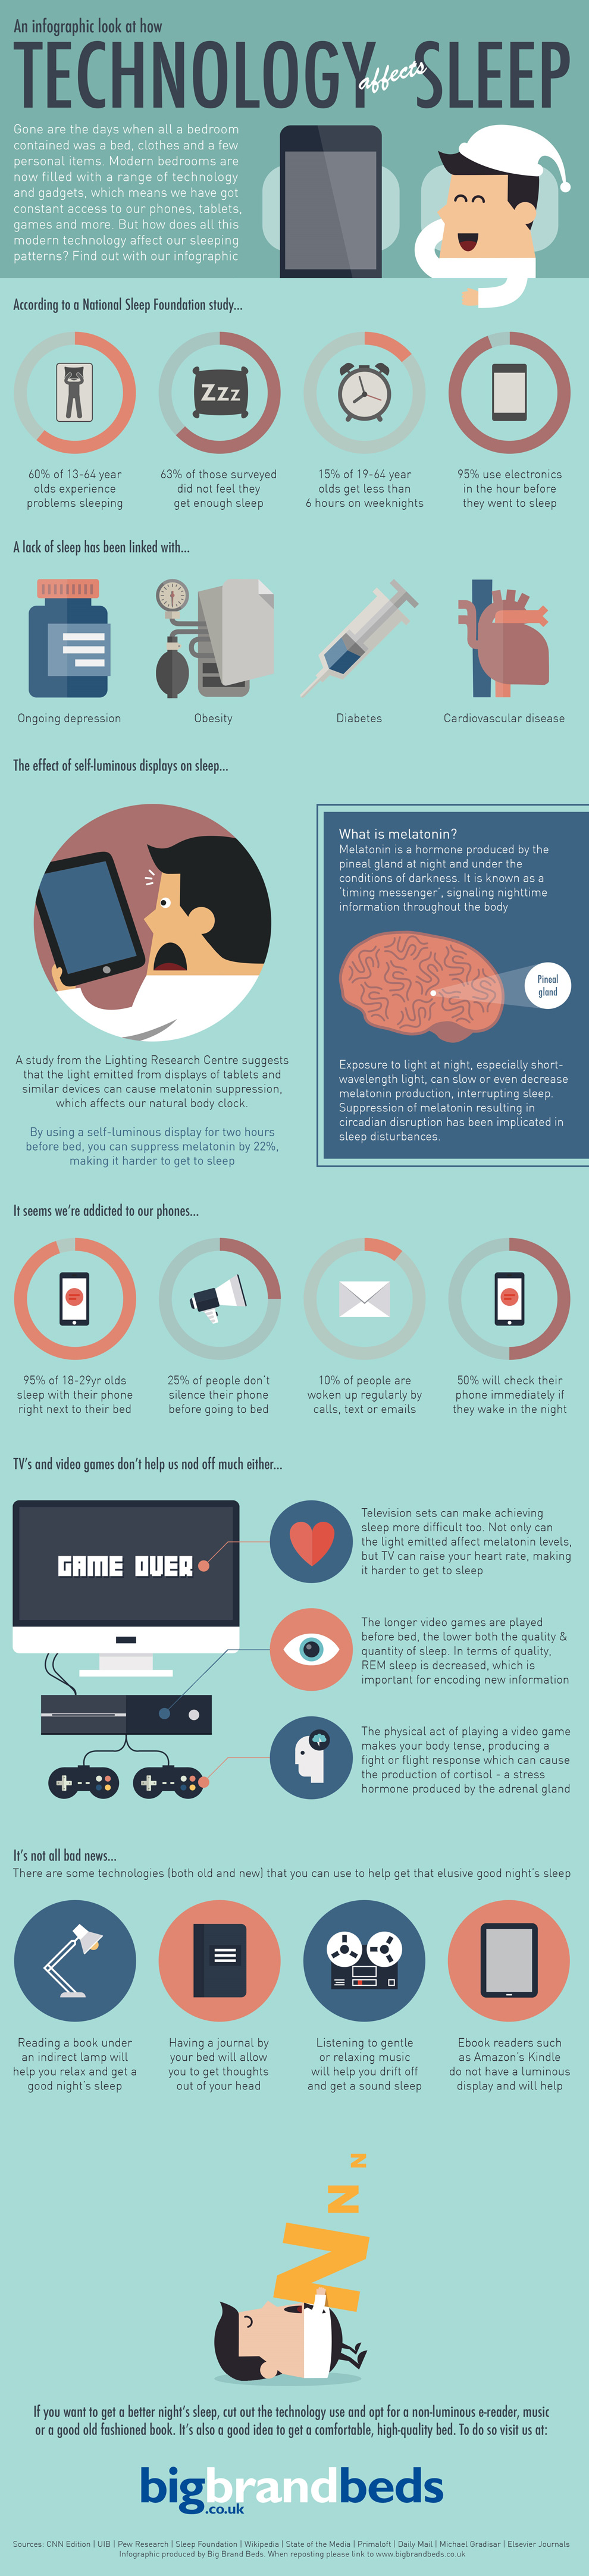 TechnologyAndSleep_Infographic